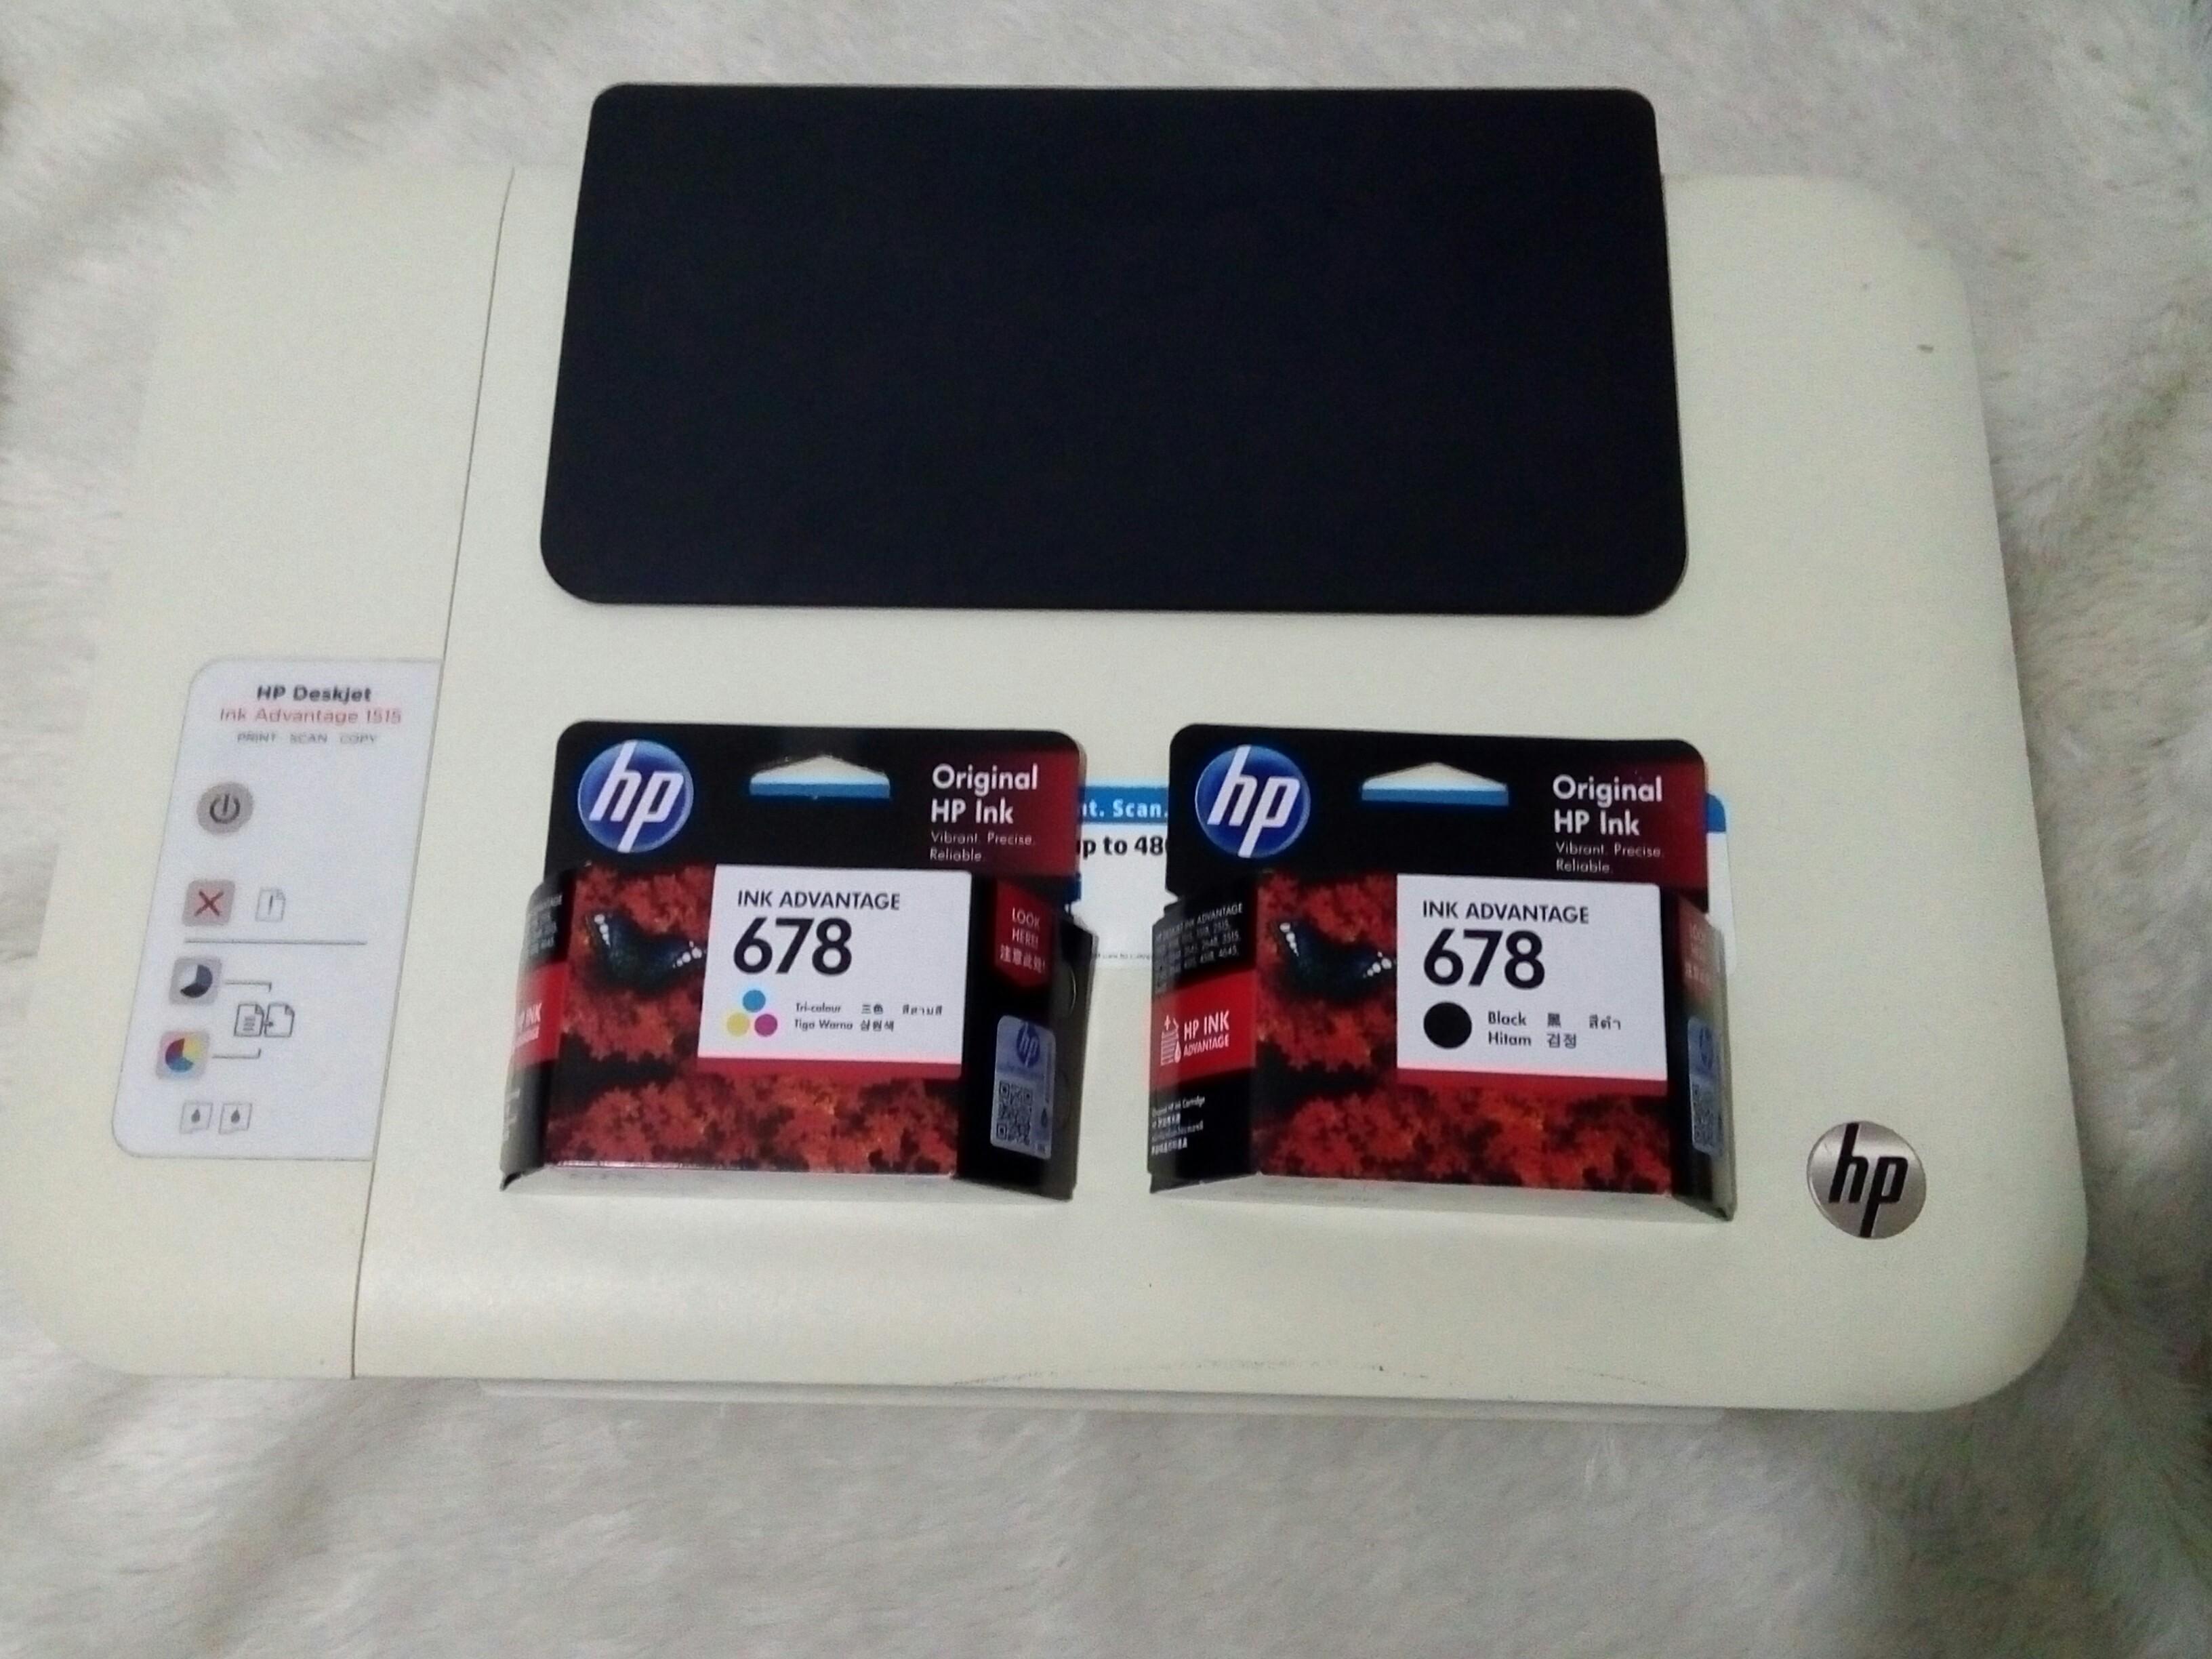 3-in-1 Printer, Scanner and Photocopy HP Deskjet 1515 w ...